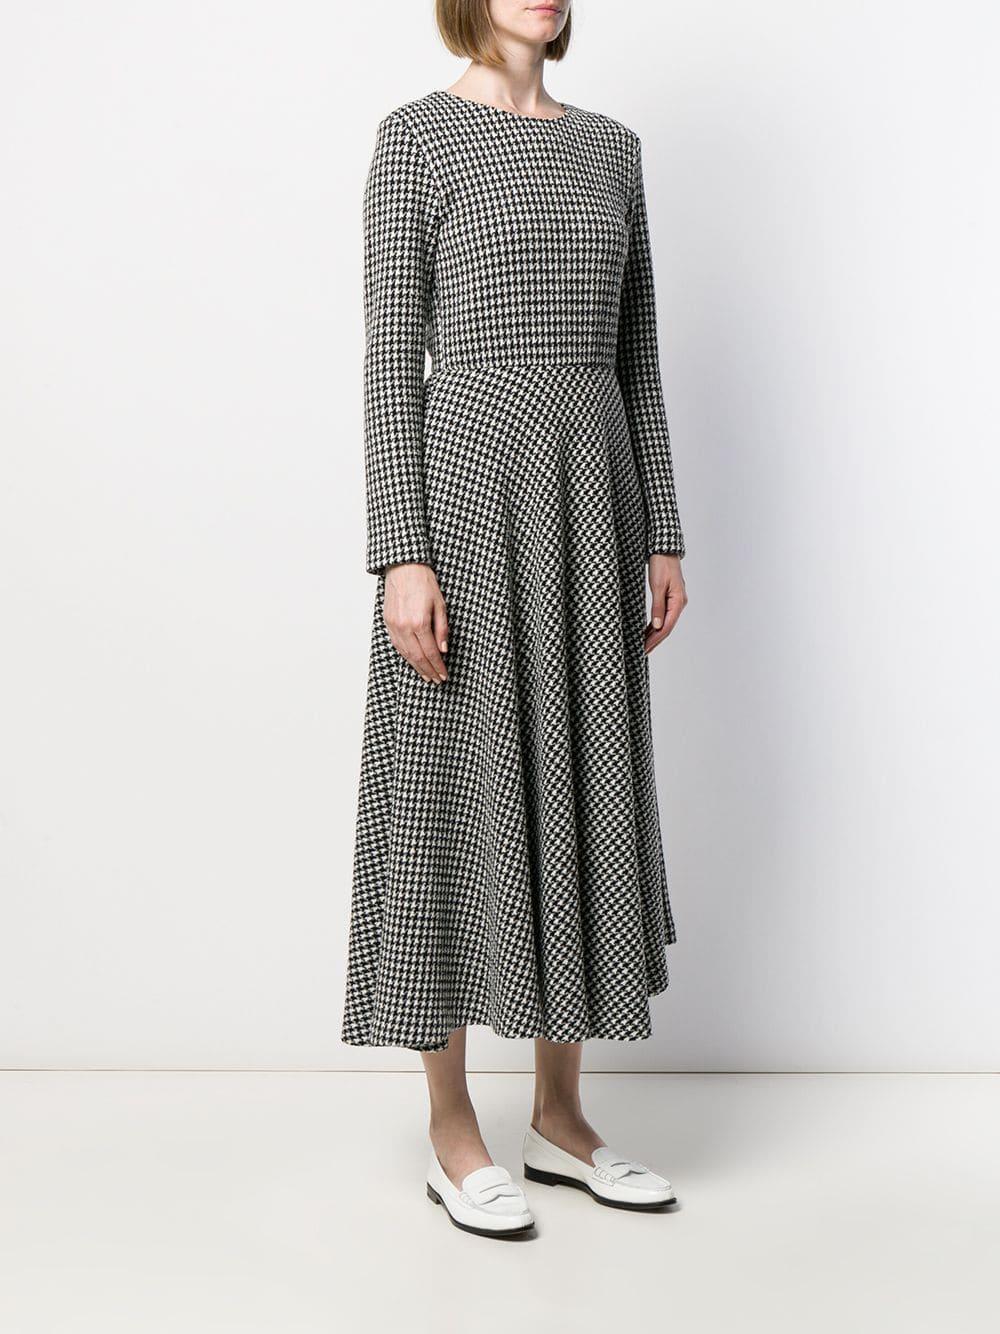 Harris Wharf London Wool Houndstooth Patterned Dress in Black - Lyst